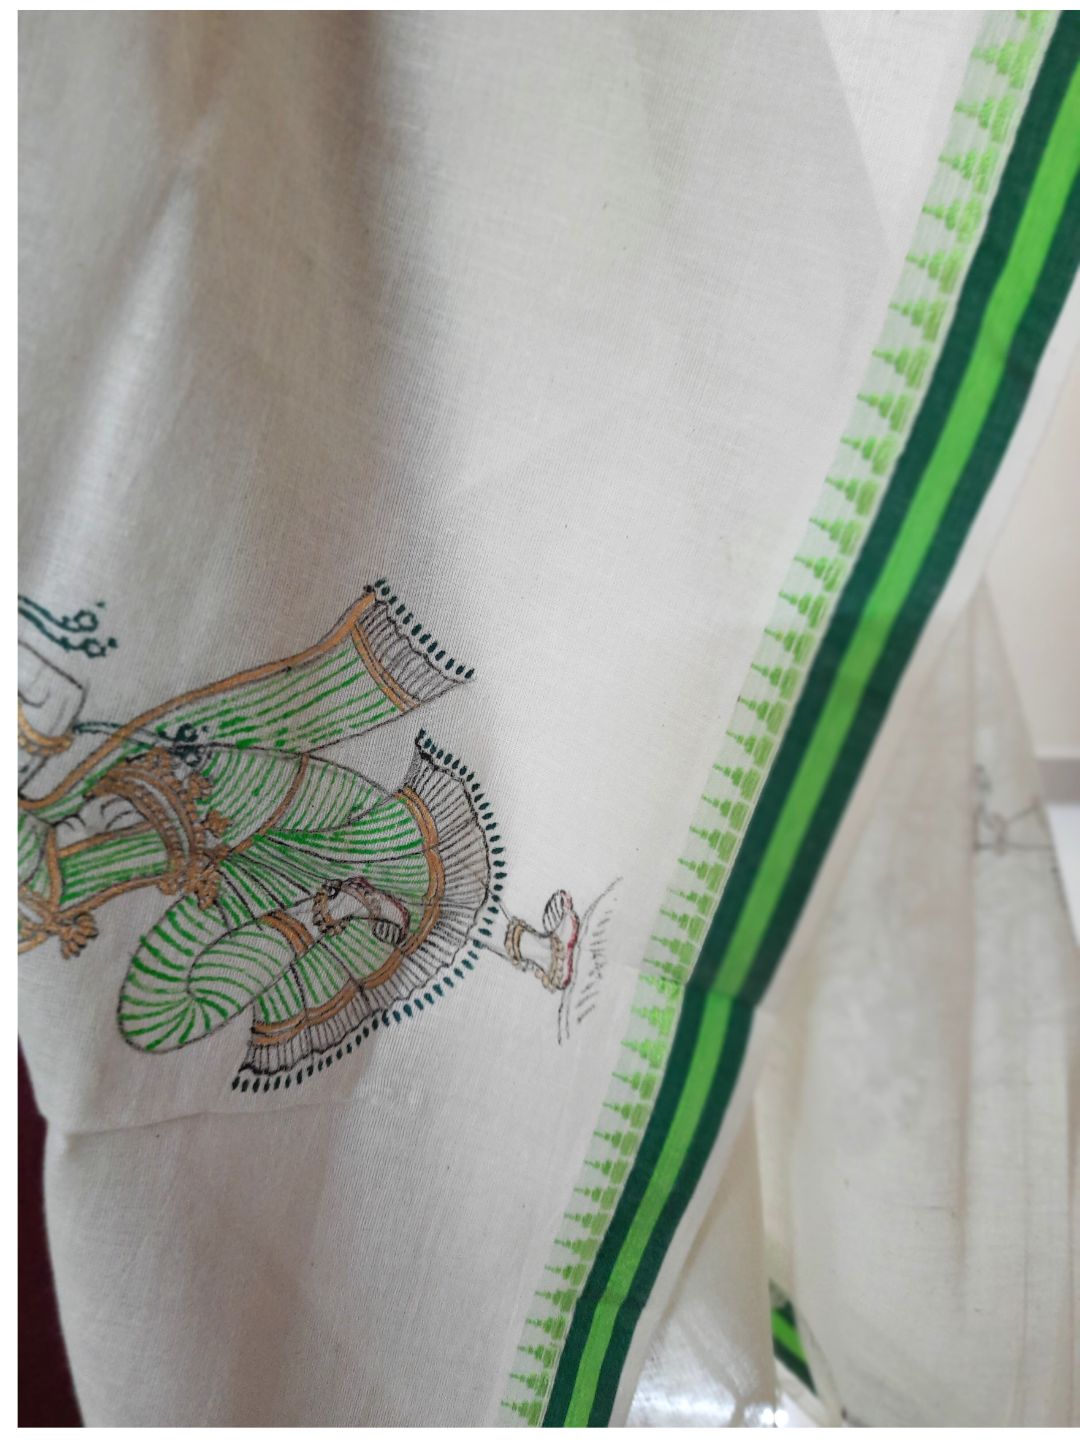 Offwhite cotton Dupatta with handpainted pattachitra motifs